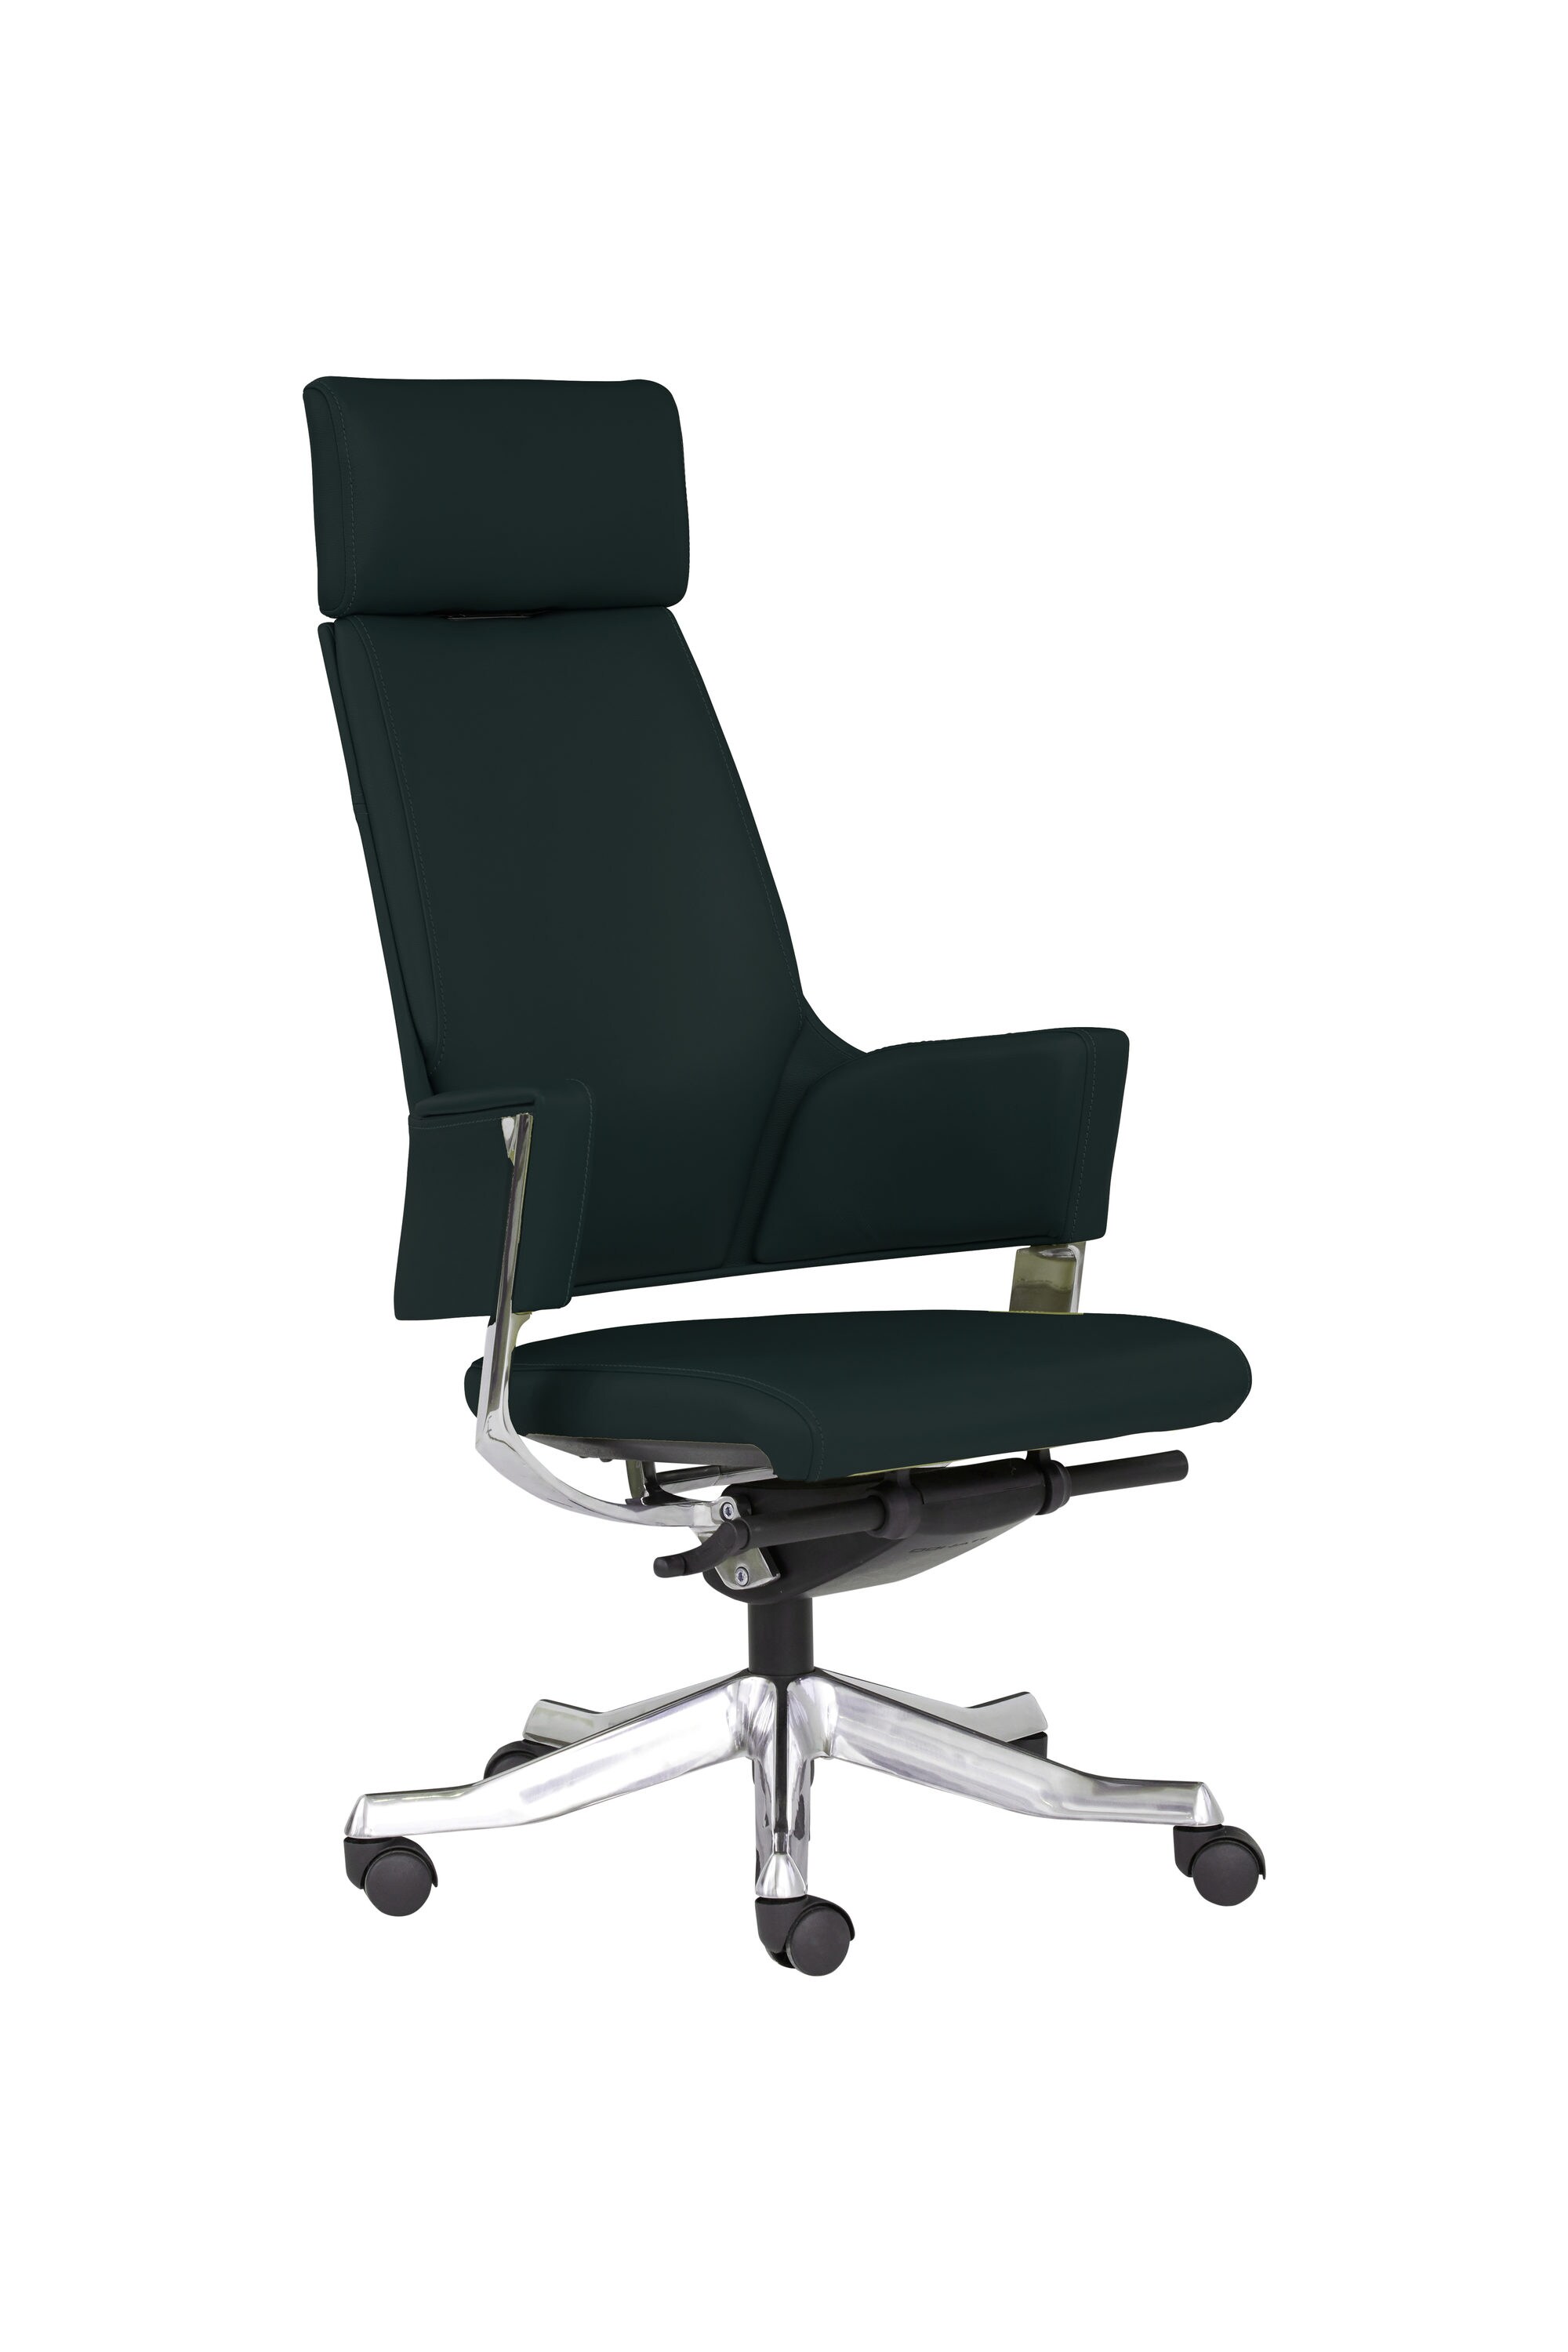 Primy Ergonomic High Back Office Chair with Adjustable Sponge